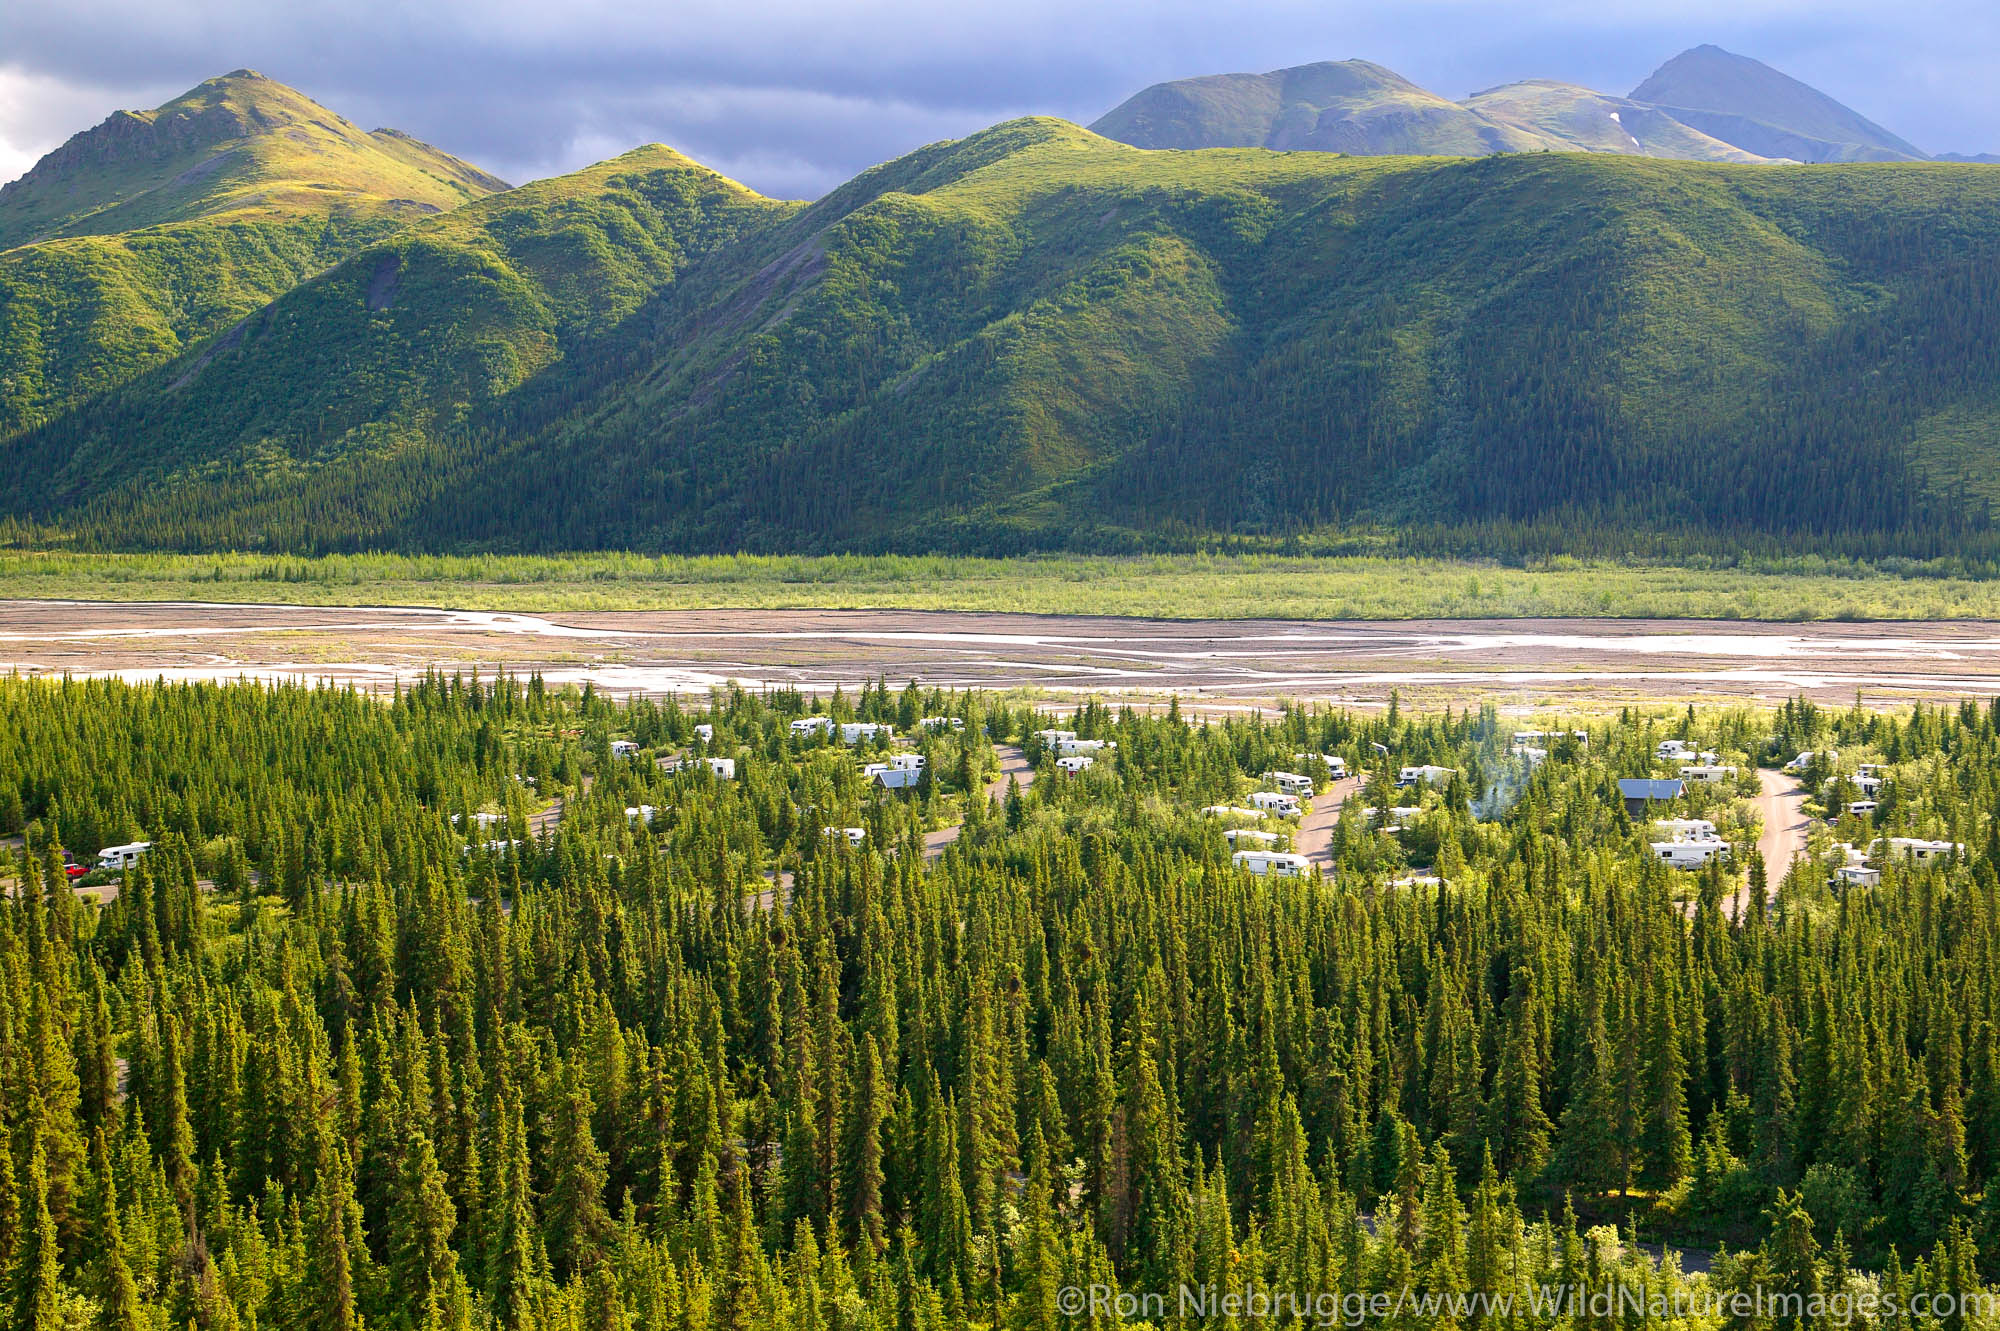 The Teklanika campground, Teklanika River Valley, Denali National Park, Alaska.